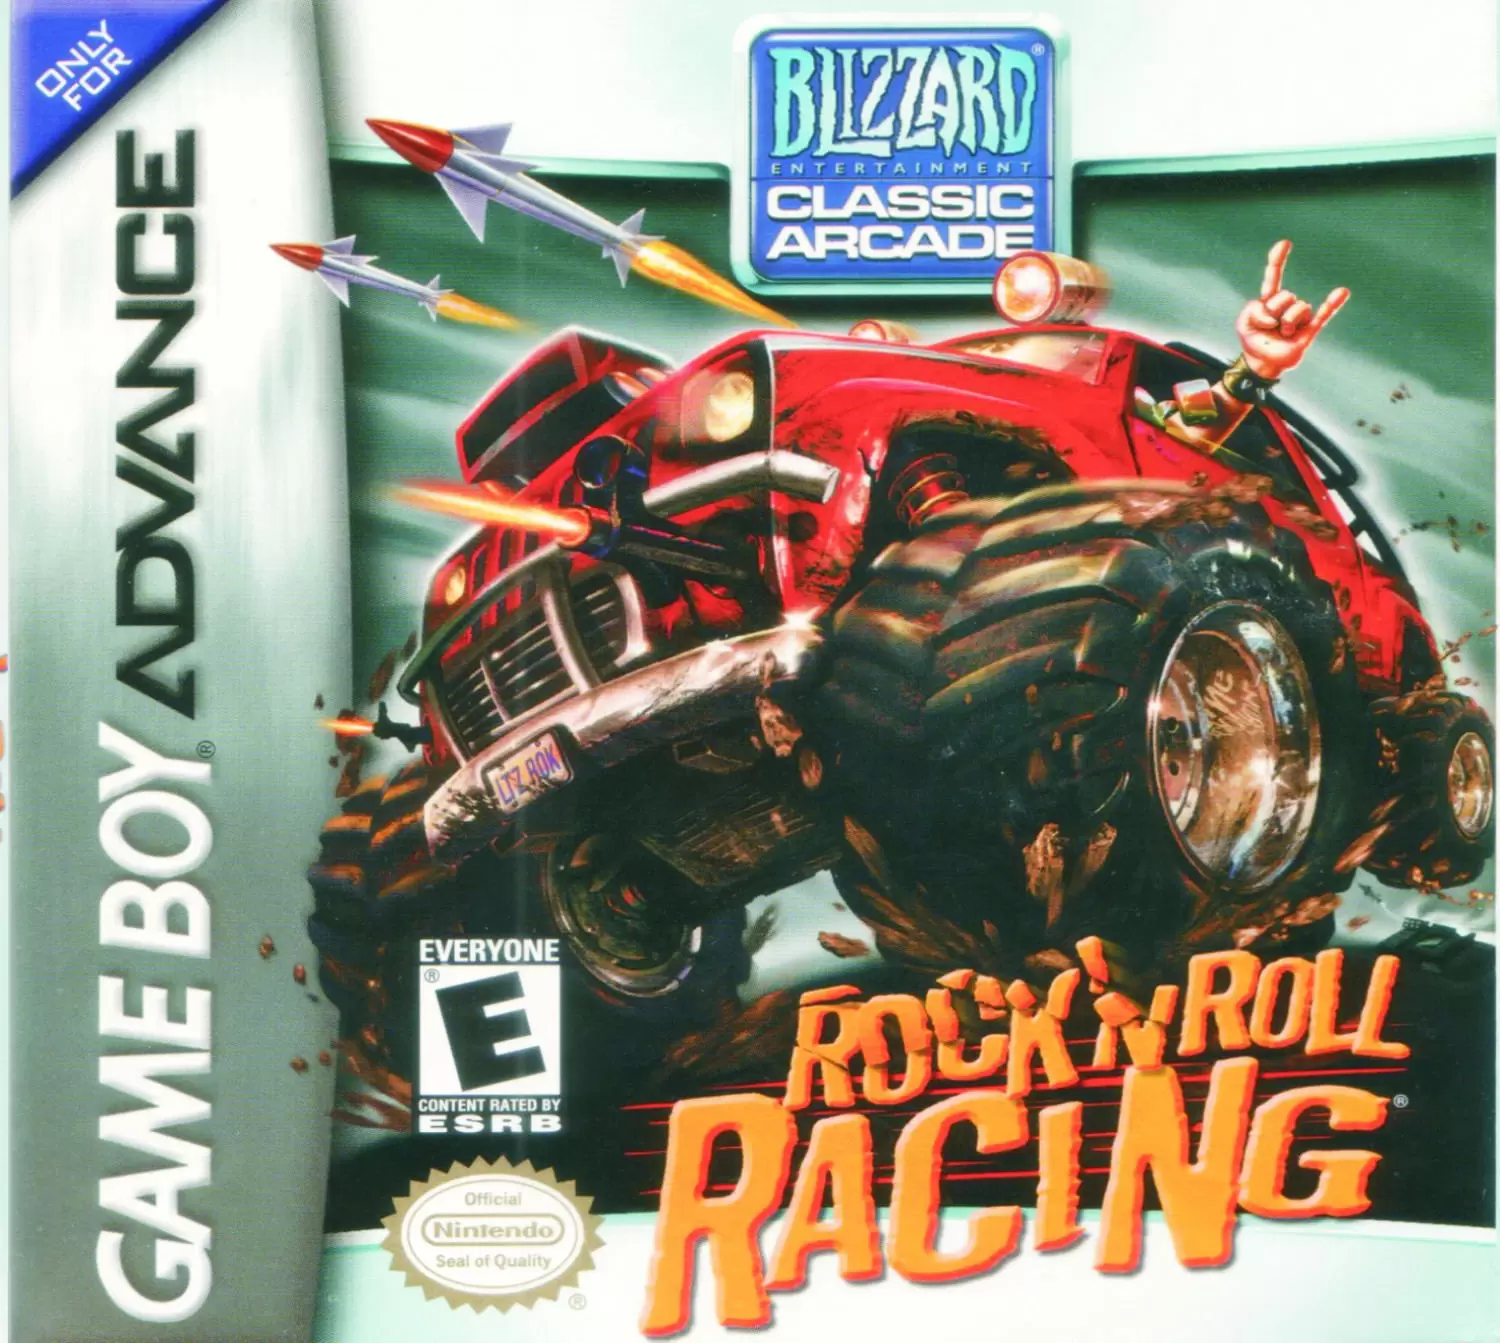 Game Boy Advance Games - Rock n\' Roll Racing